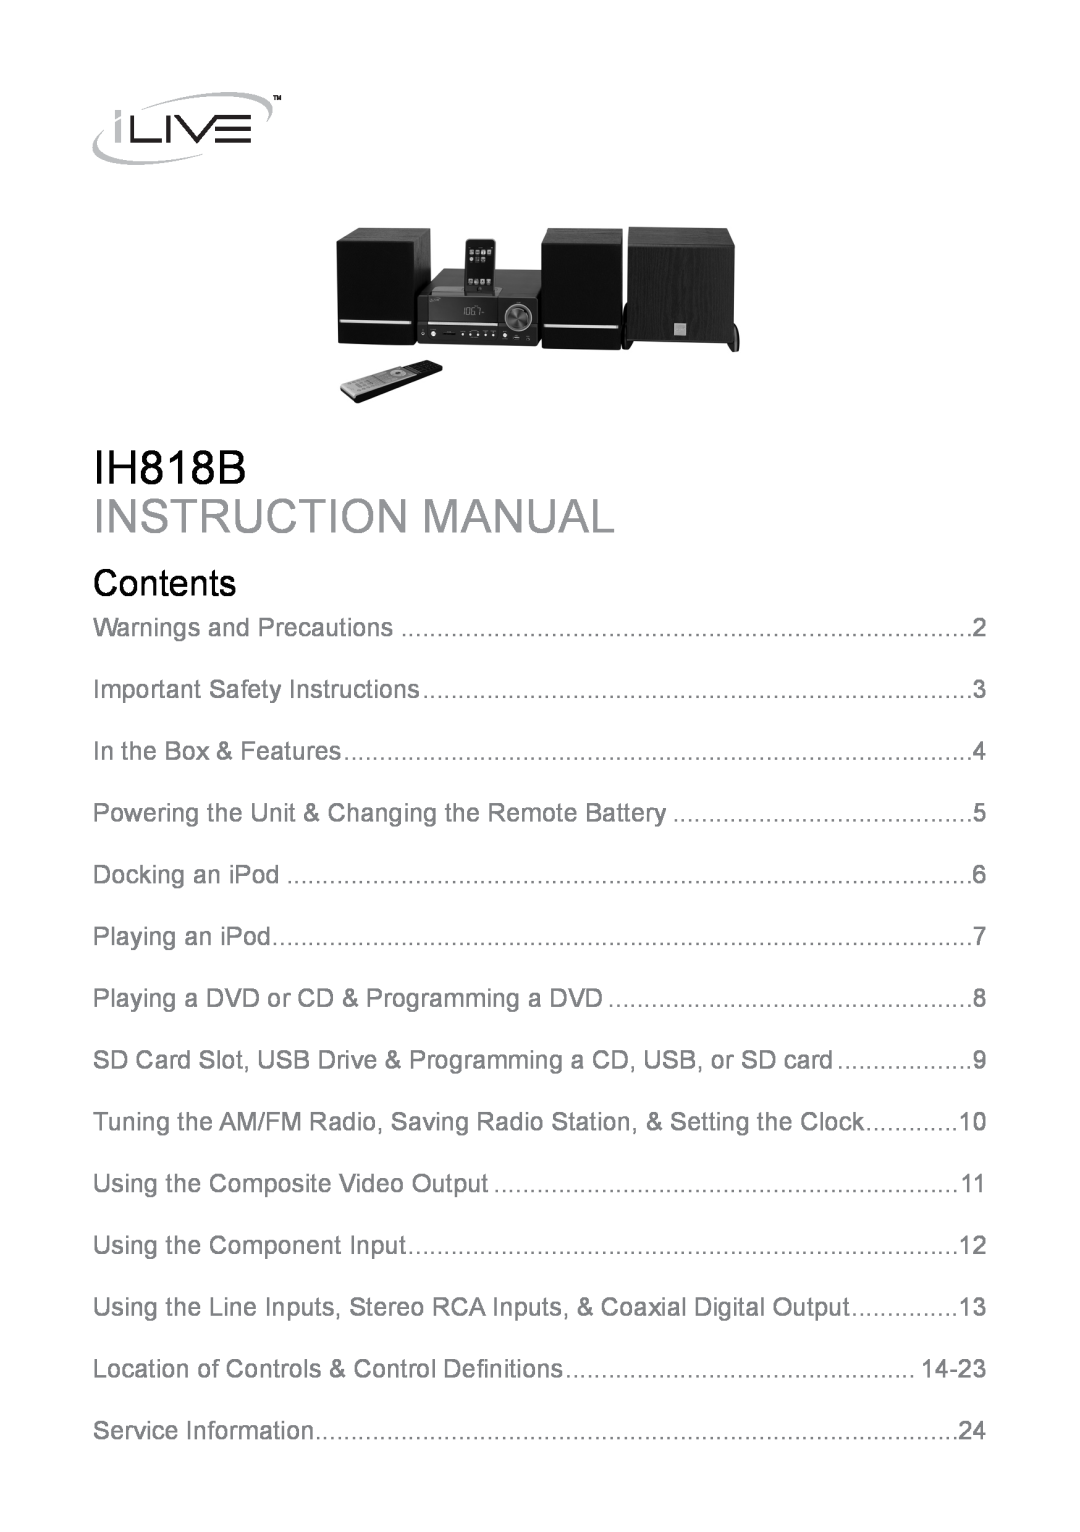 iLive IH818B instruction manual Contents, 14-23 